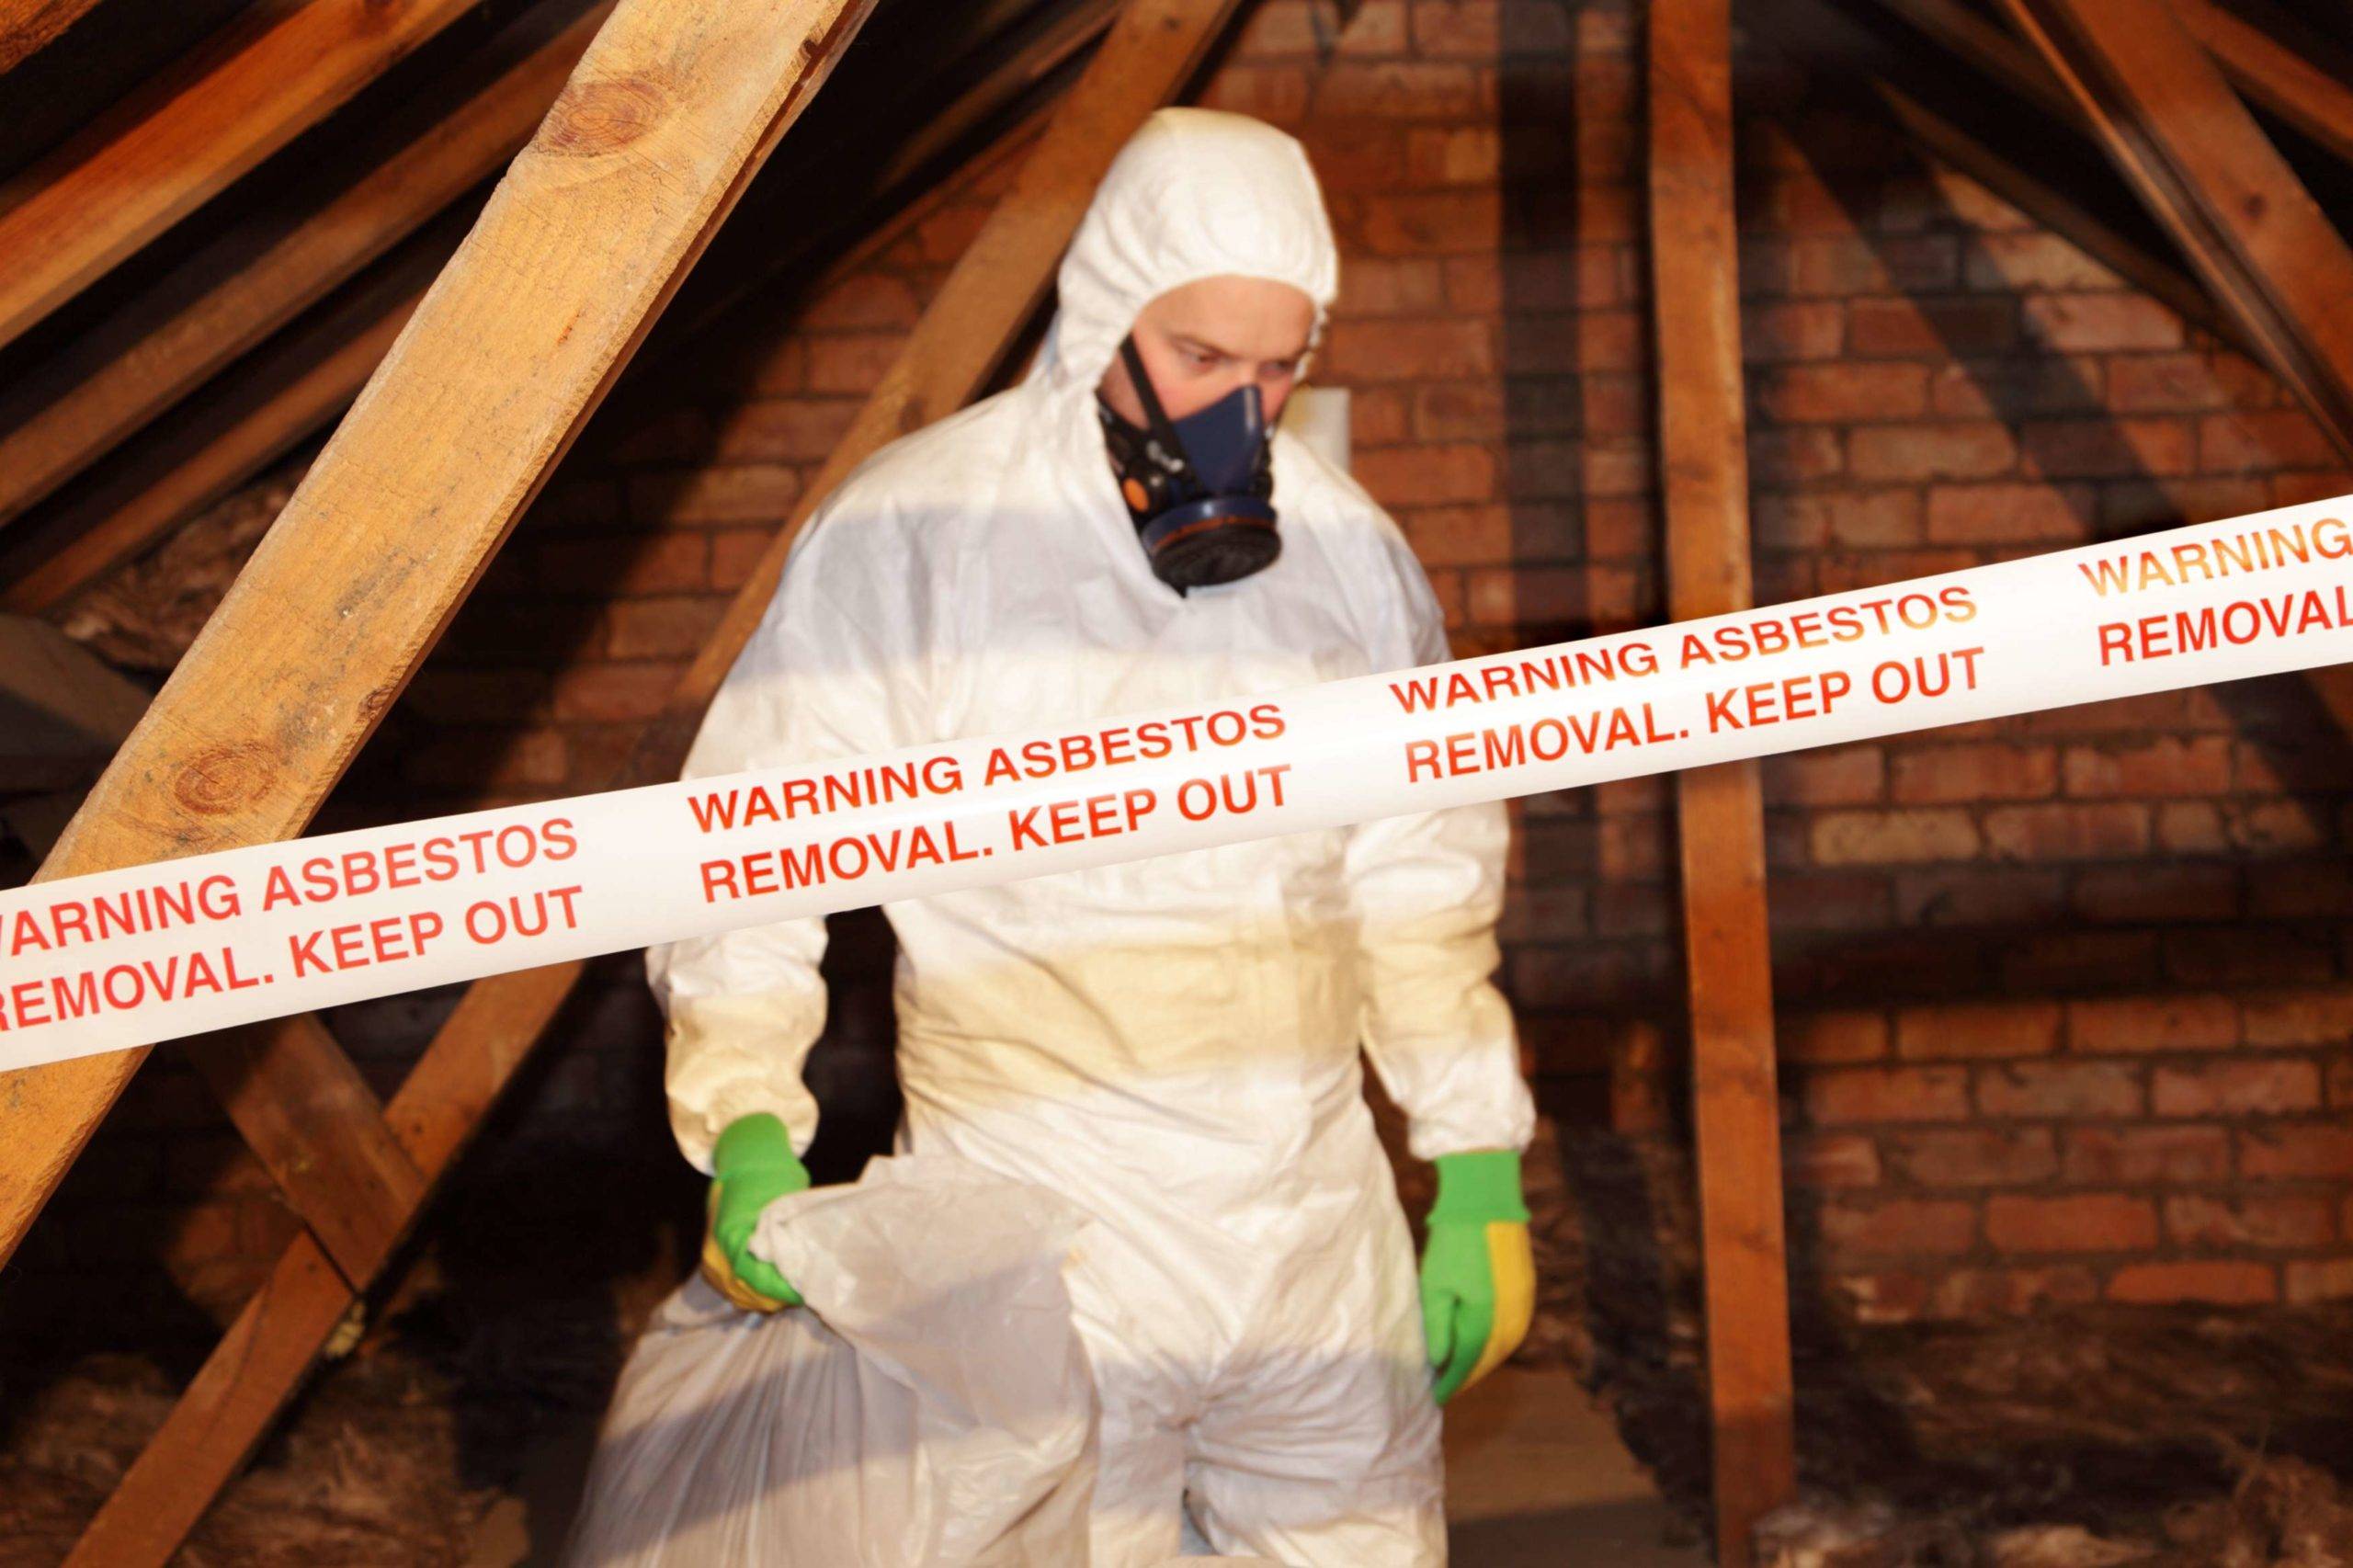 Asbestos Removal Services Australia scaled 1 - Decon Solutions Australia Services